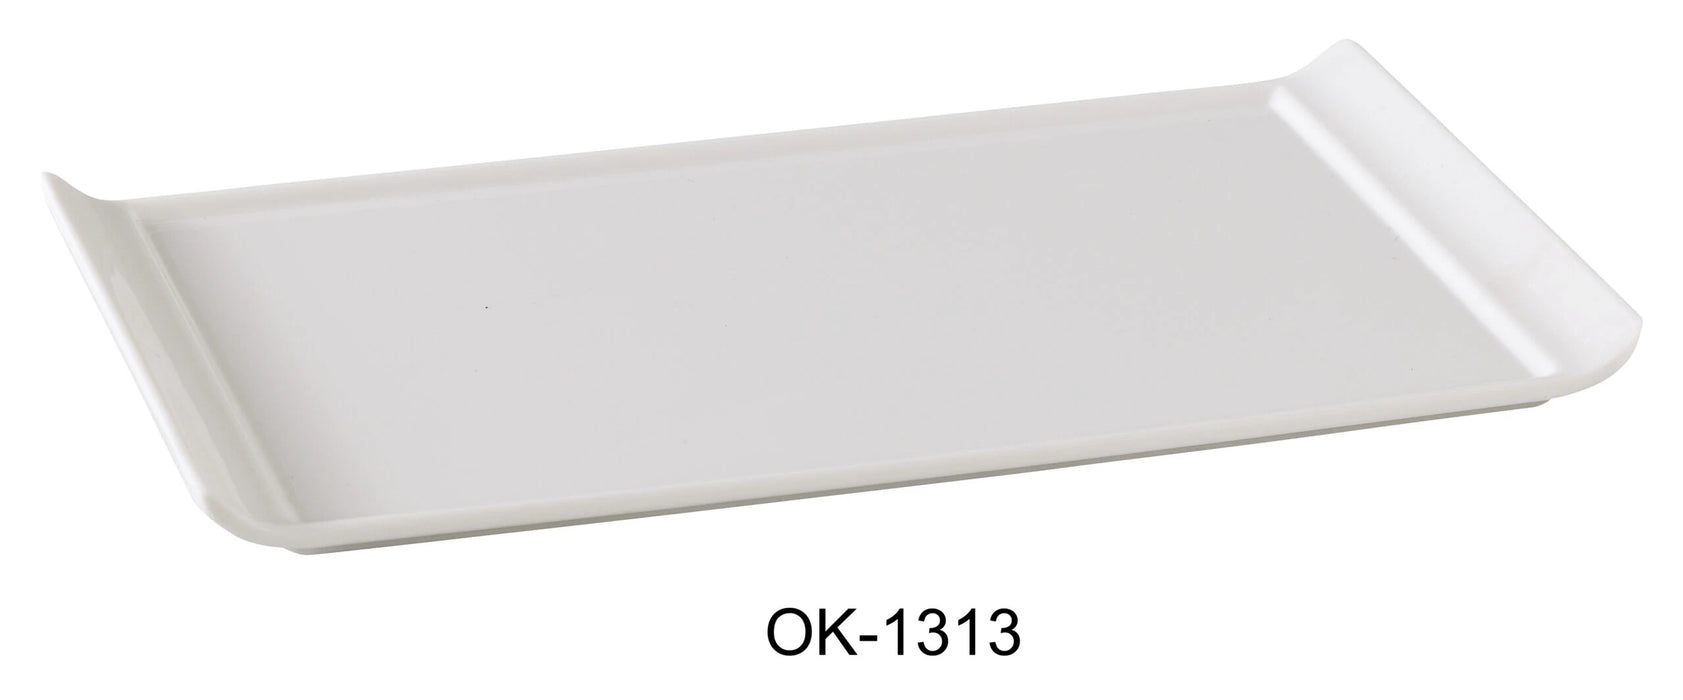 Yanco OK-1313 Osaka-2 Display Plate, Rectangular, 13″ Length, 6.75″ Width, Melamine, White Color, Pack of 12